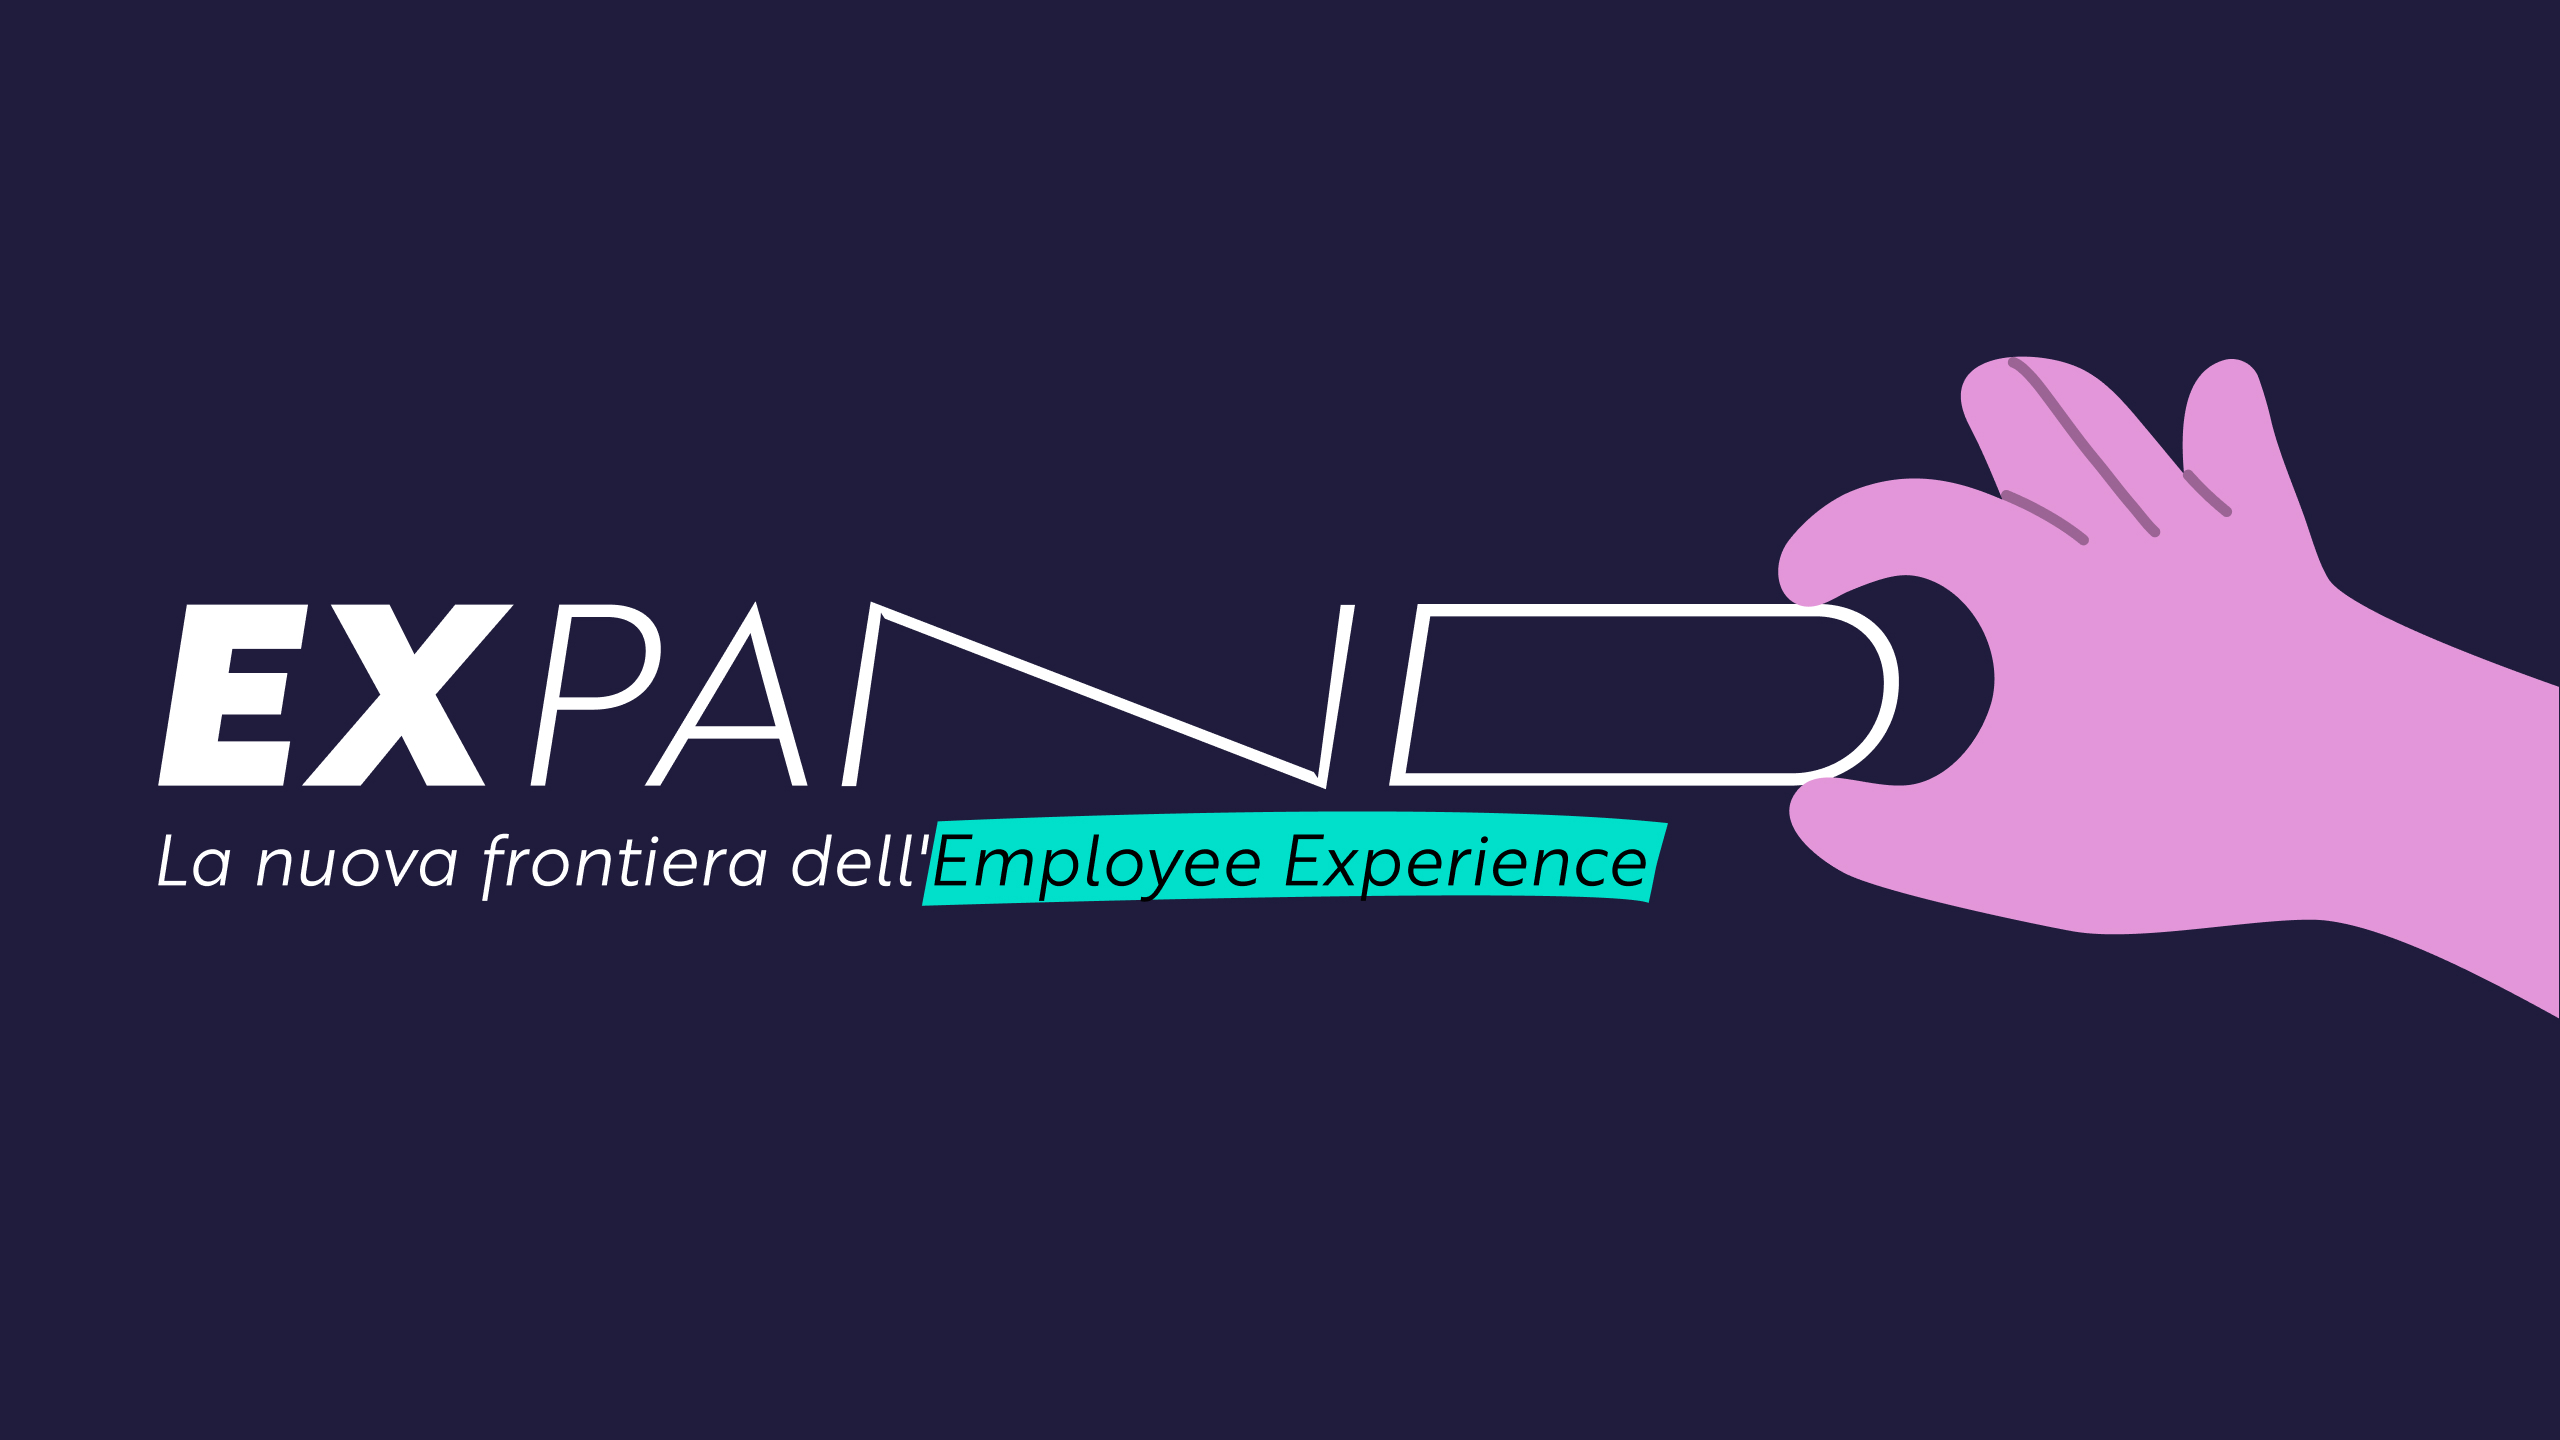 Inspiration EXpand: la nuova frontiera dell'Employee Experience